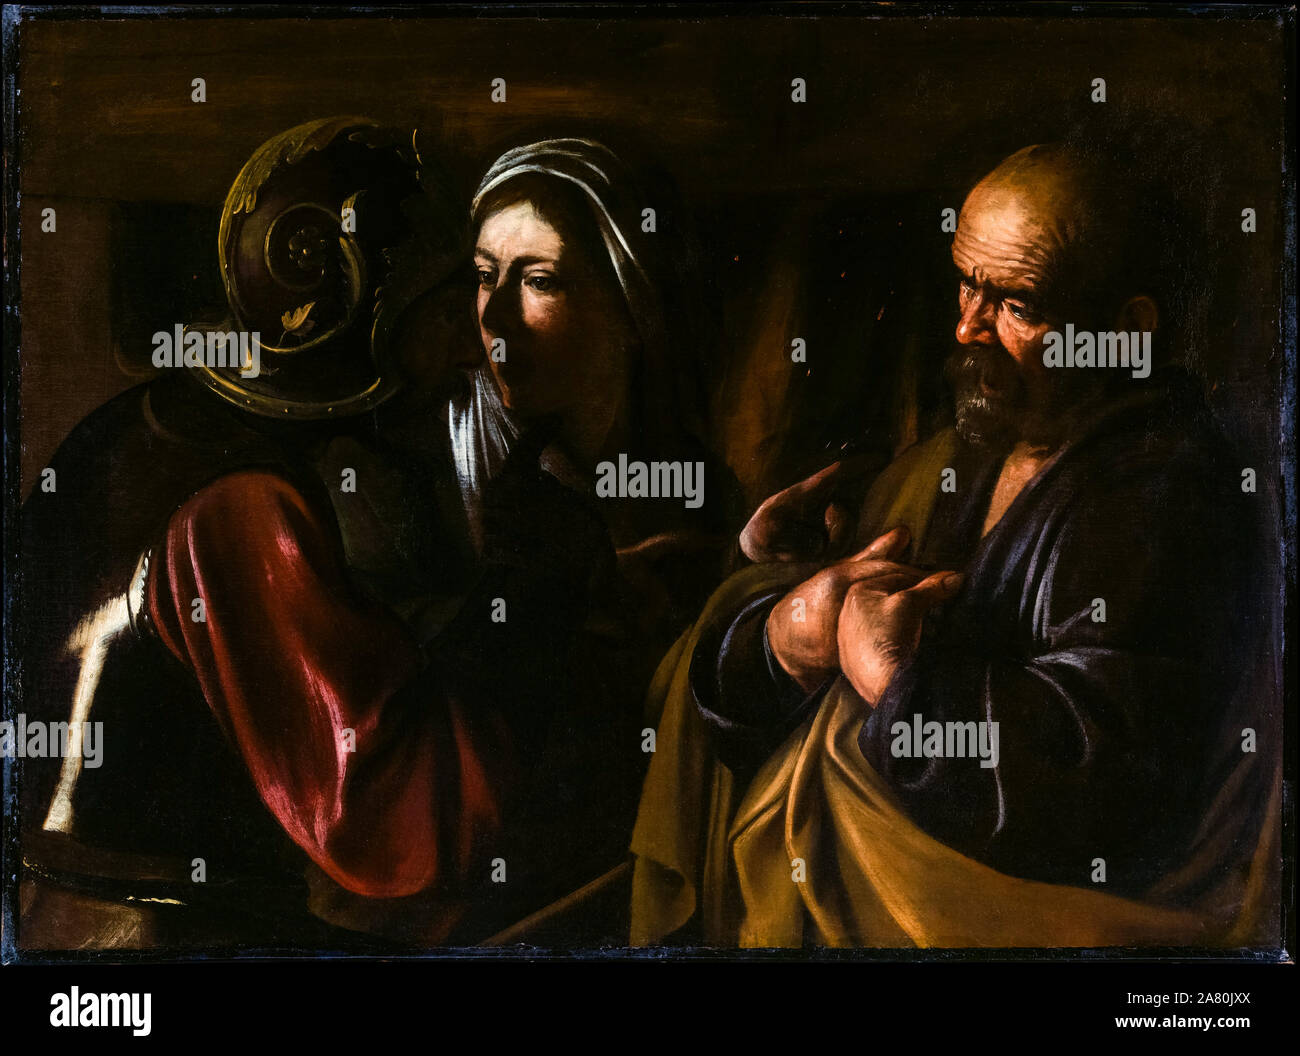 Caravaggio, The Denial of Saint Peter, painting, 1610 Stock Photo